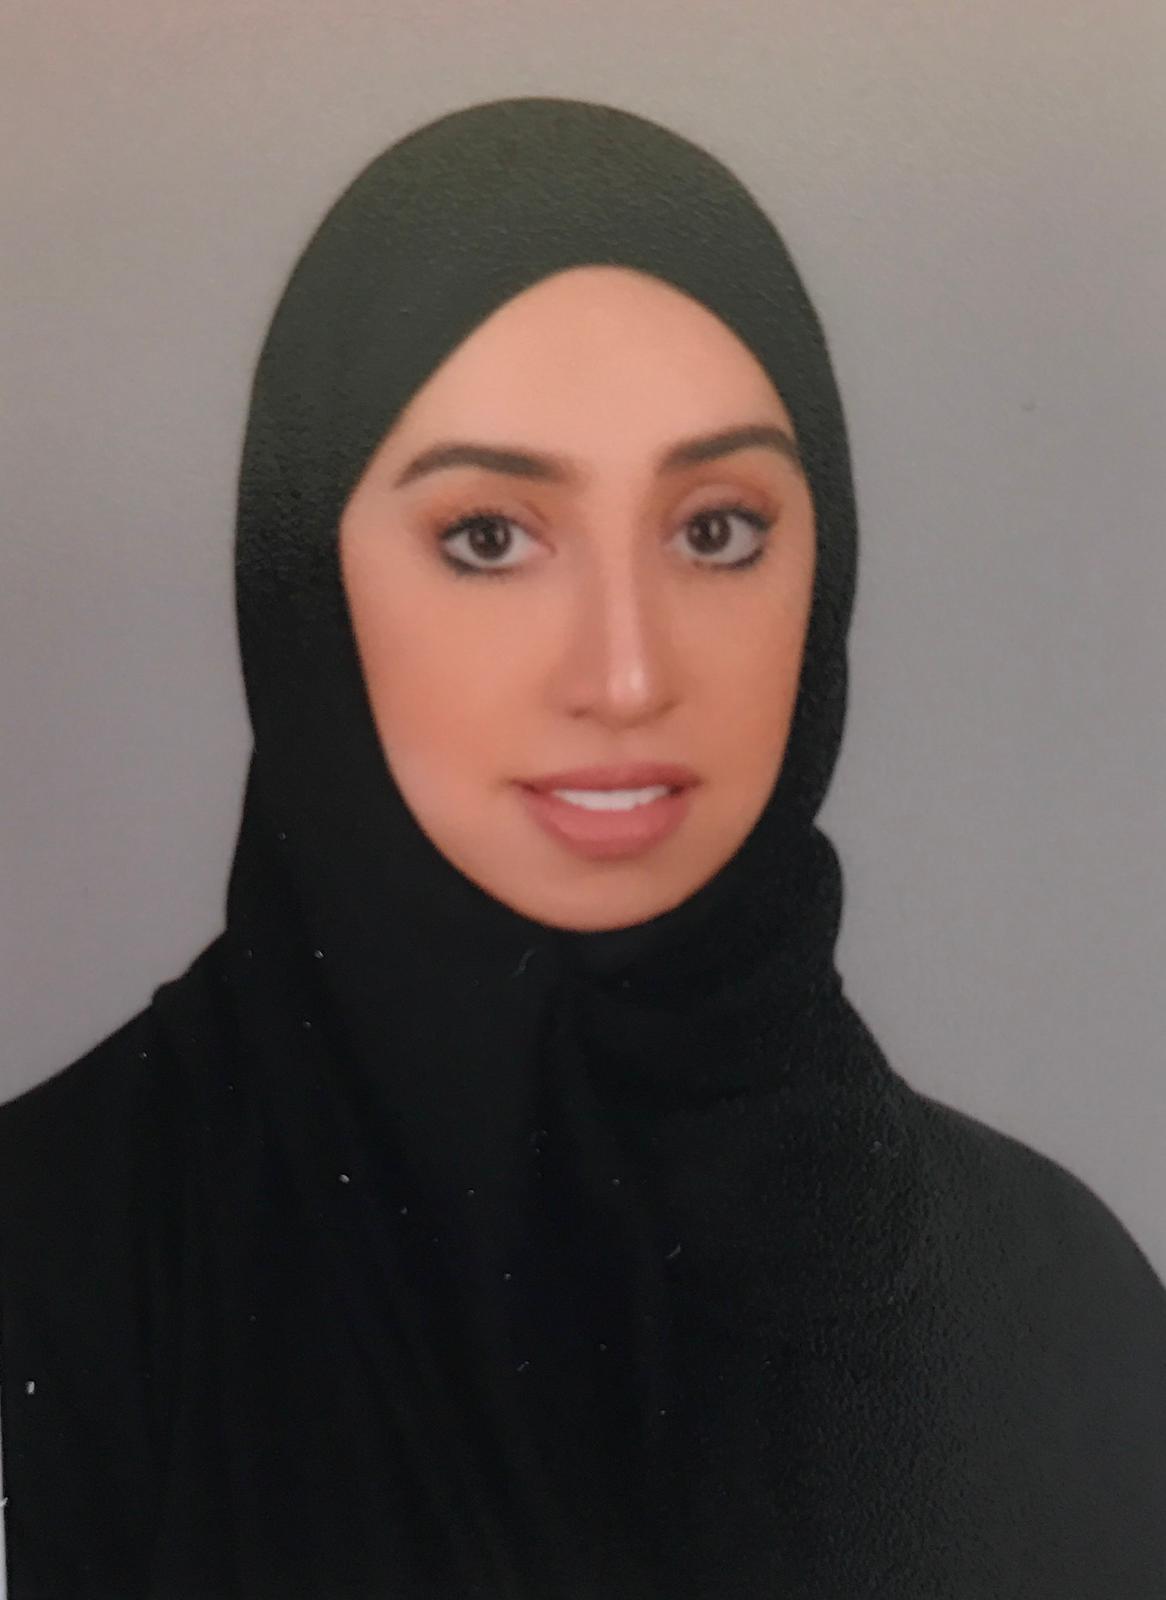 Ms. Mashael Ali Youef Al-Hammadi